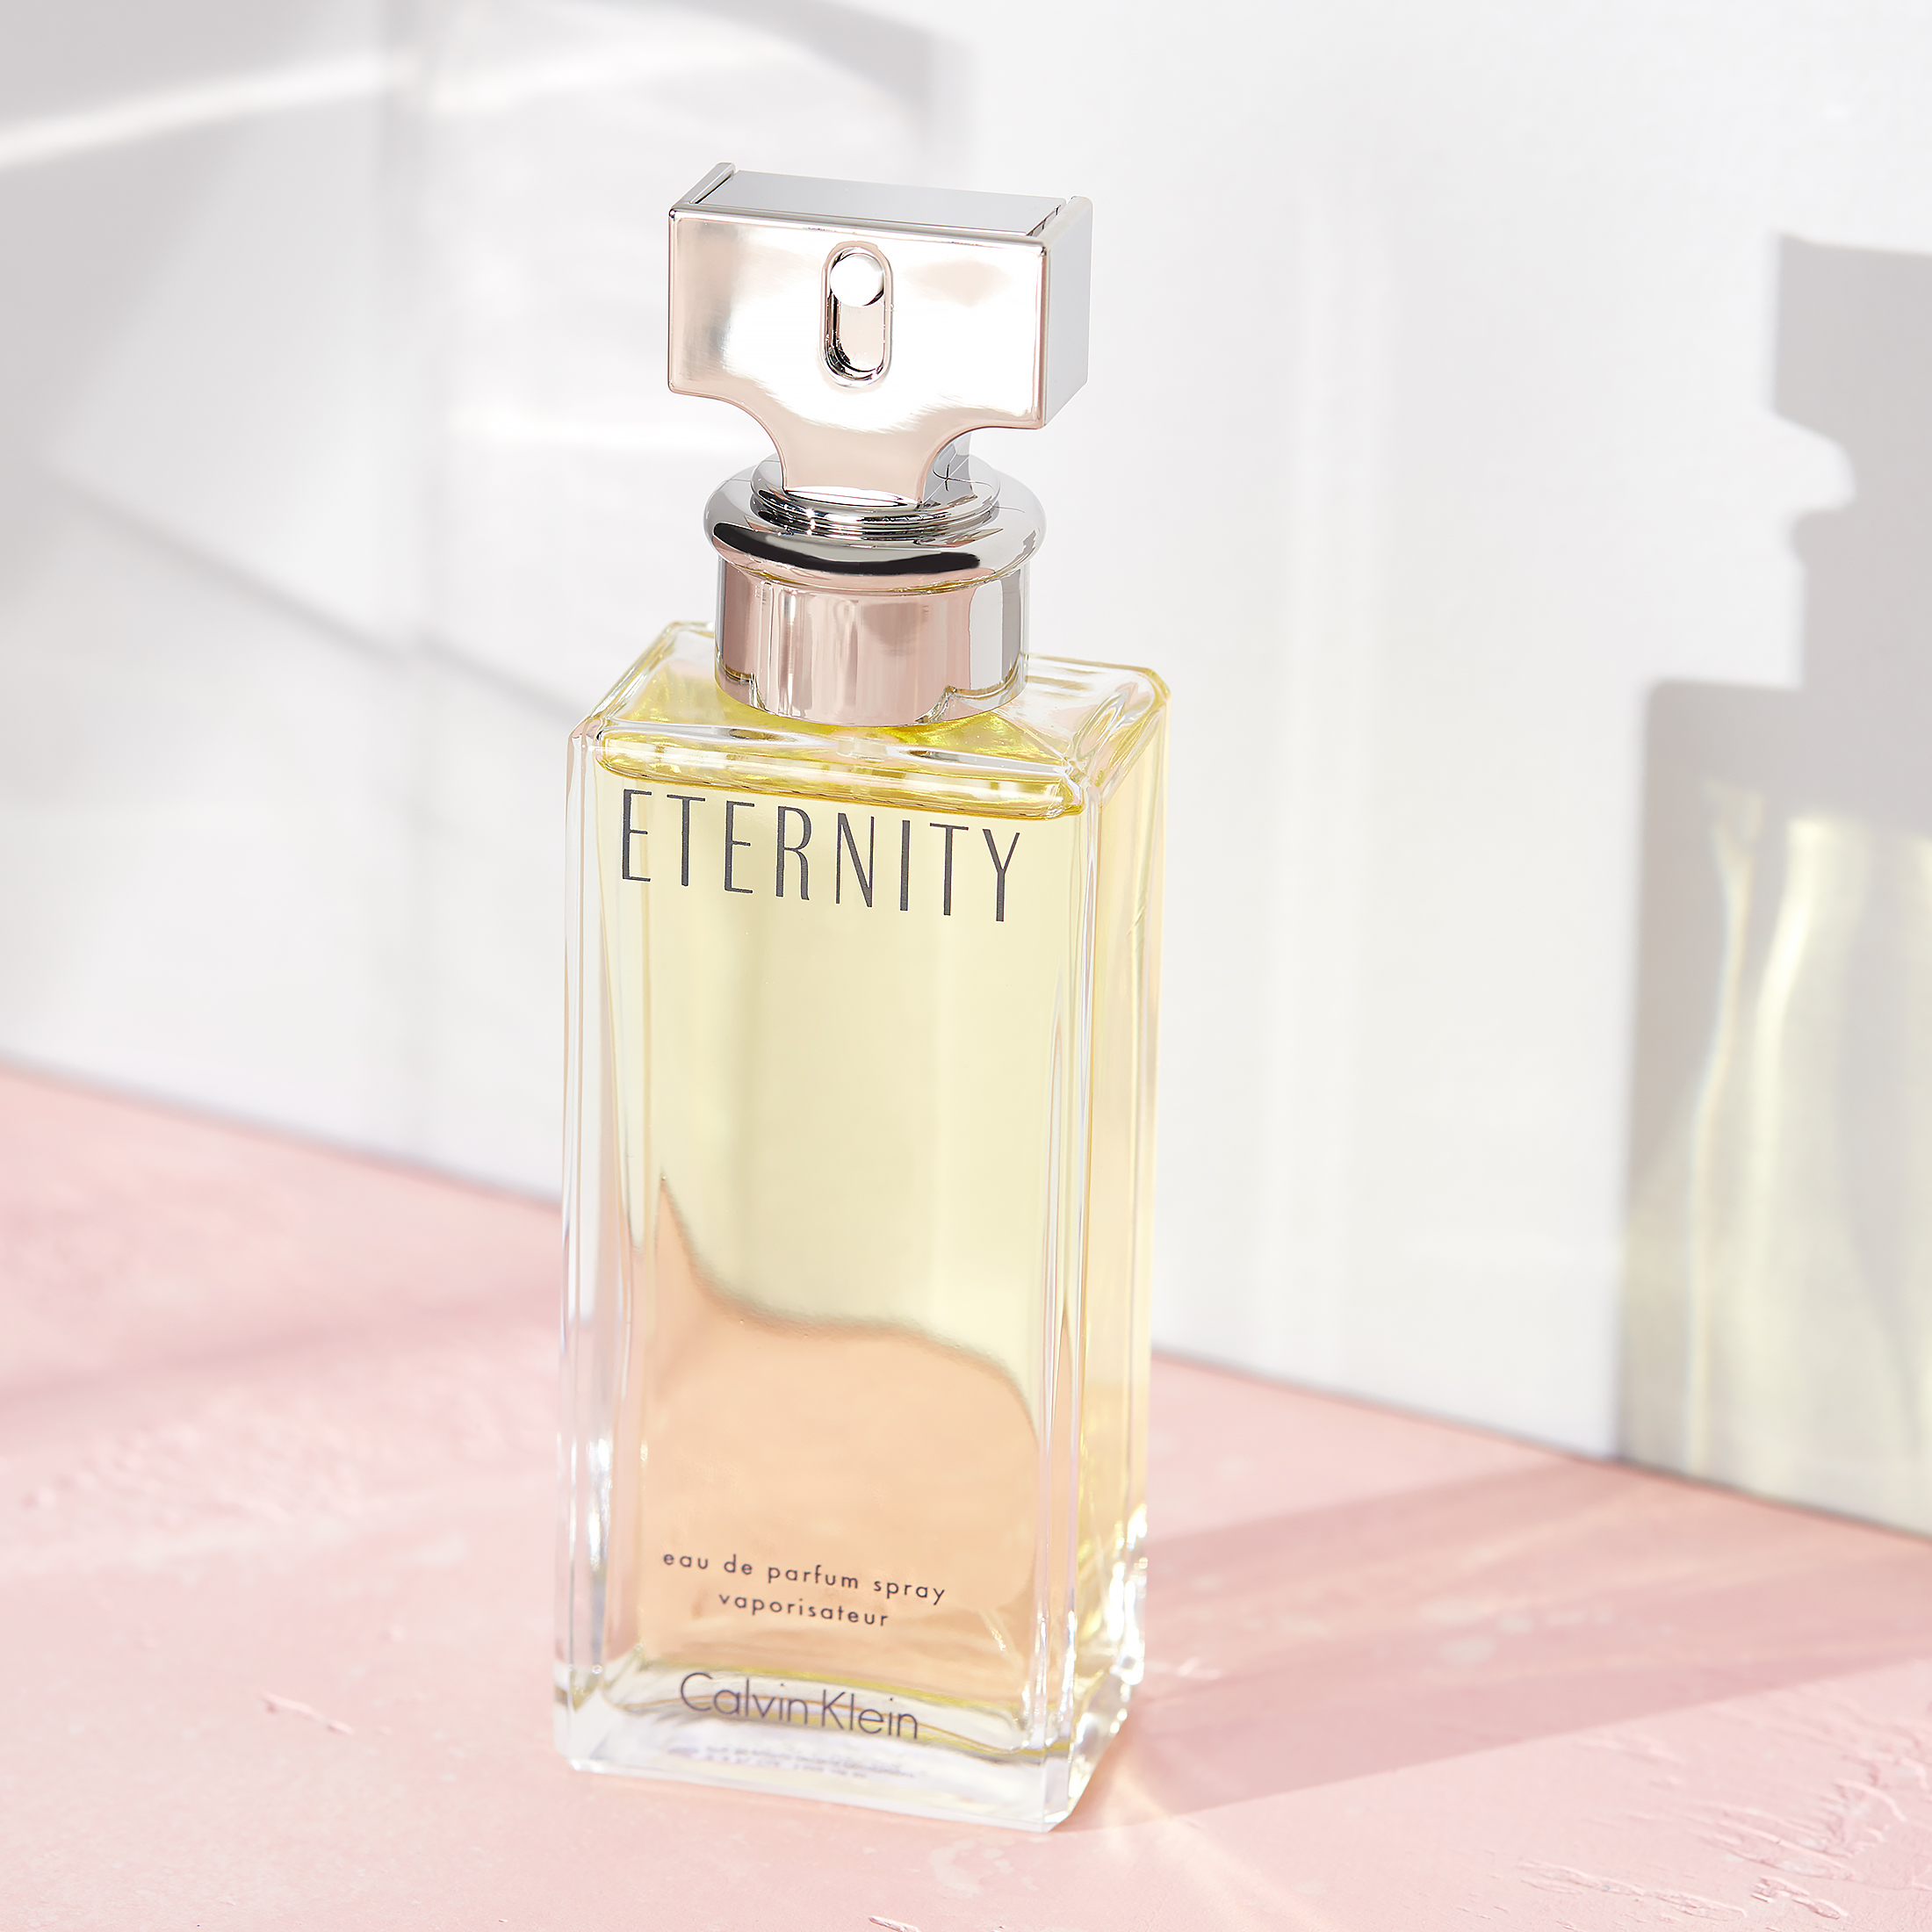 Calvin Klein Eternity Eau De Parfum Spray, Perfume for Women, 3.4 oz - image 3 of 5